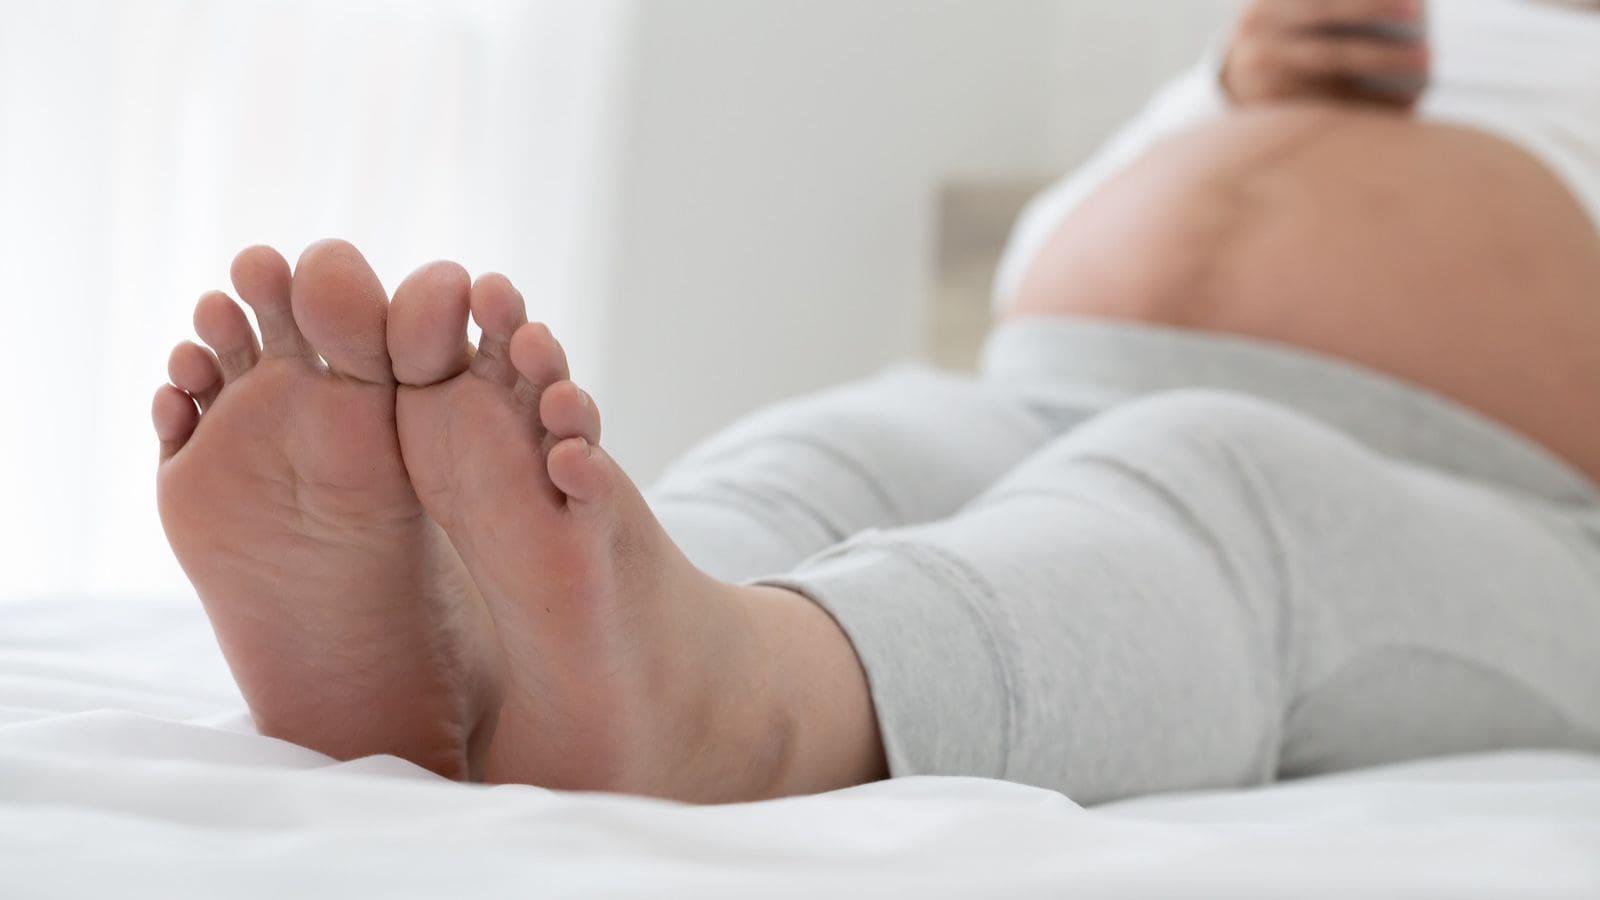 Feet during pregnancy